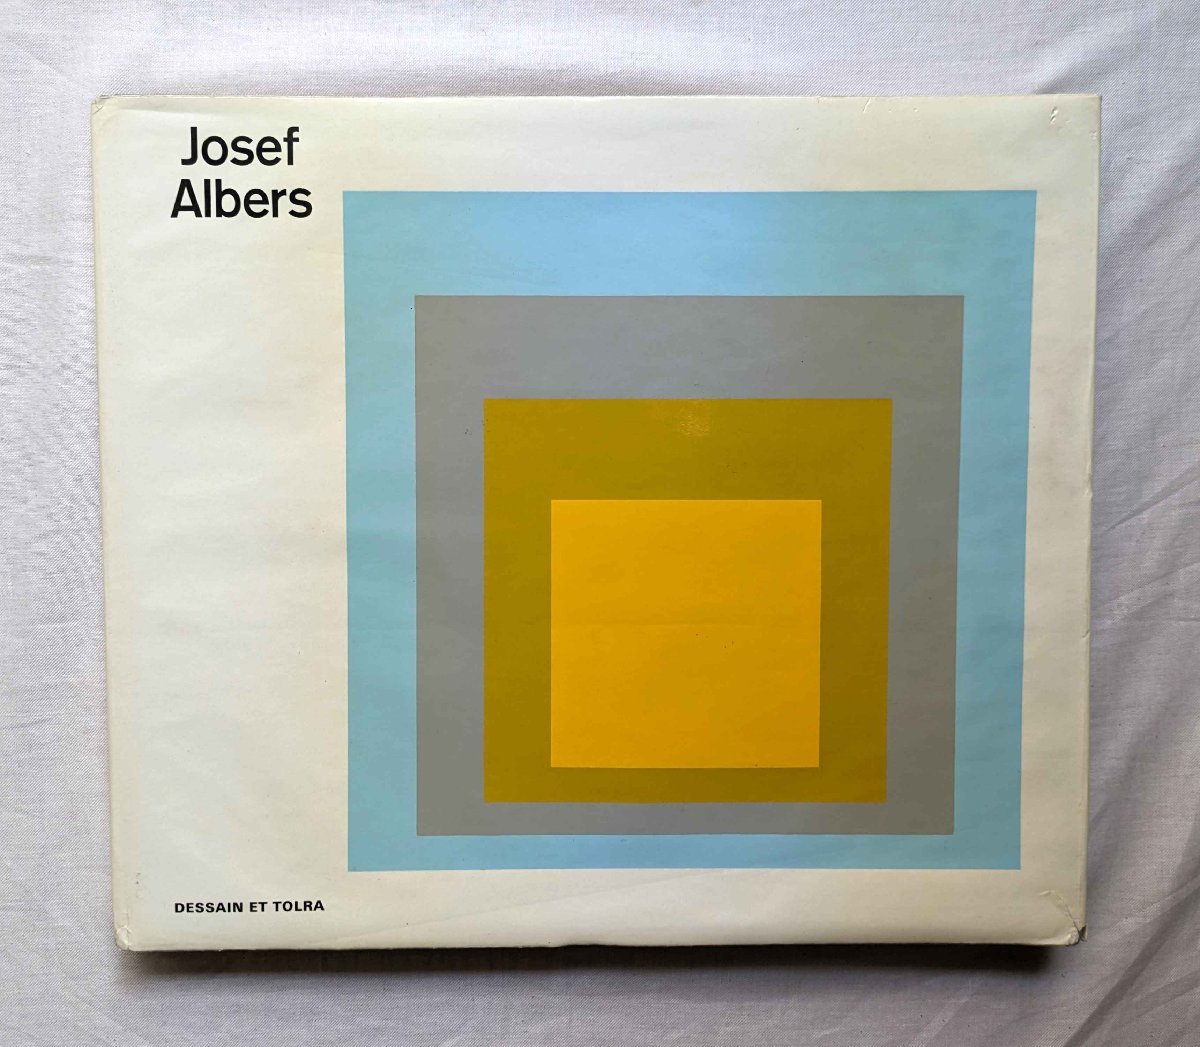 जोसेफ अल्बर्स 1972 जोसेफ अल्बर्स डेसैन एट टोलरा यूजेन गोमिंगर बुक 16 सिल्कस्क्रीन प्रिंट्स होमेज टू द स्क्वायर बॉहॉस, चित्रकारी, कला पुस्तक, संग्रह, कला पुस्तक